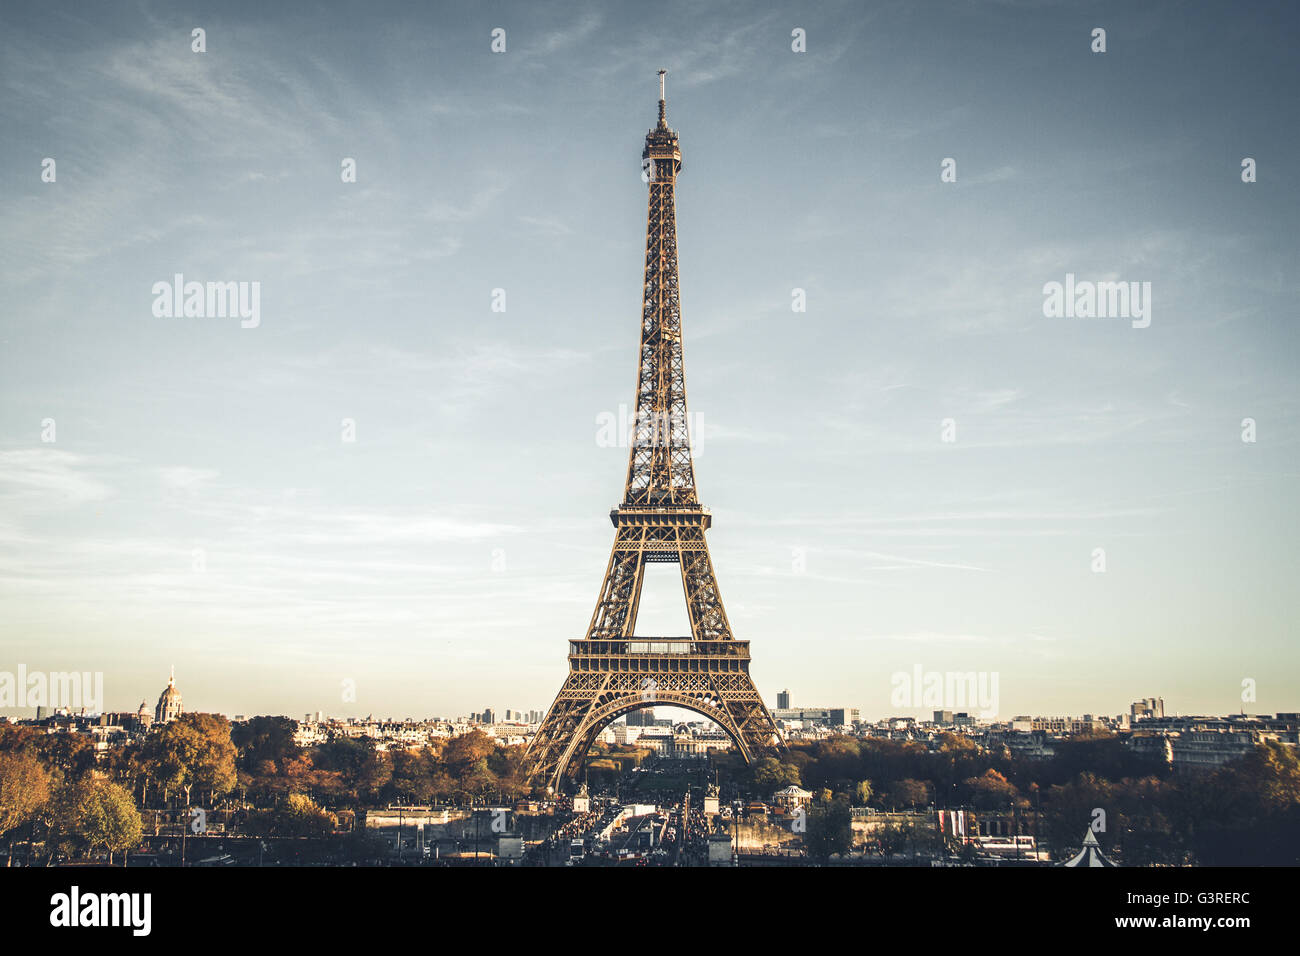 The Eiffel Tower - most famous landmark of Paris Stock Photo